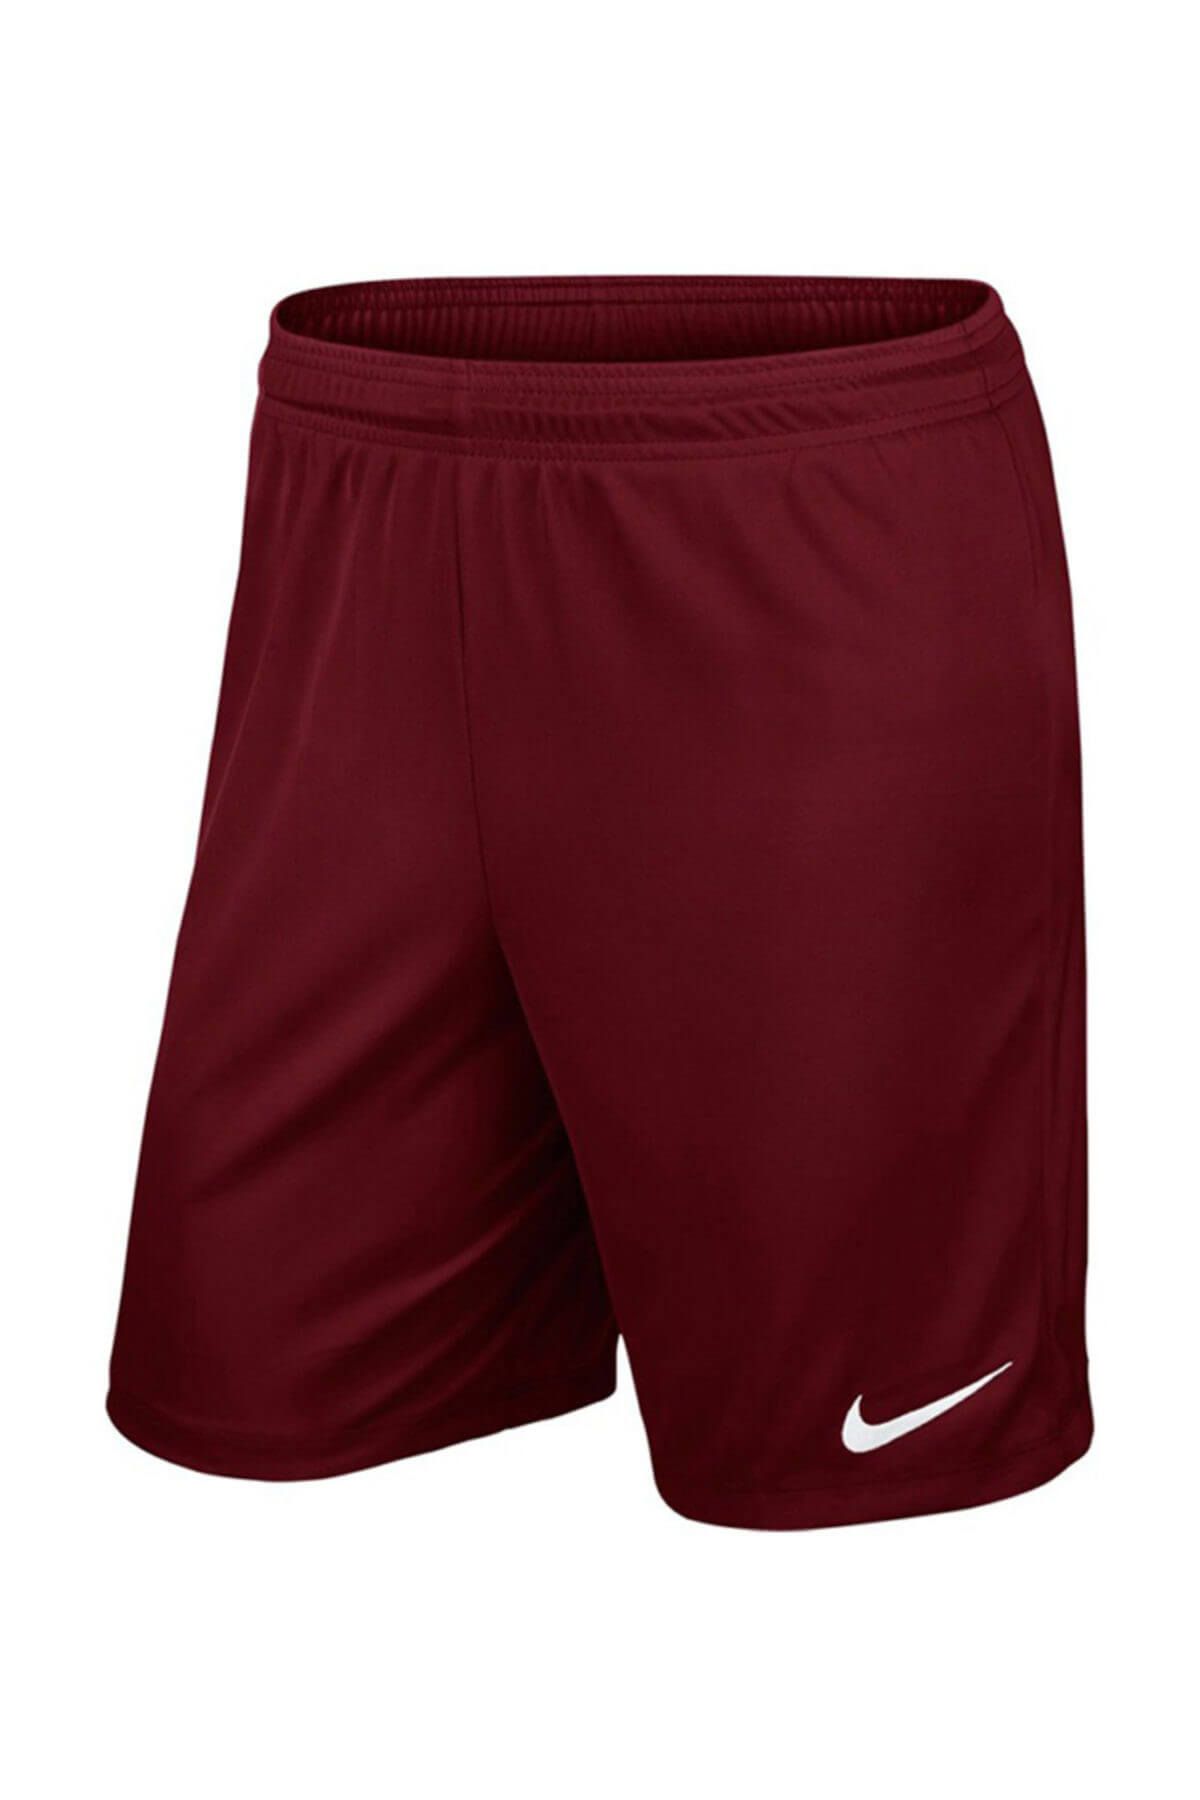 Nike Unisex Şort/Bermuda -  Park II Knit WB Futbol Maç Şortu - 725903-677